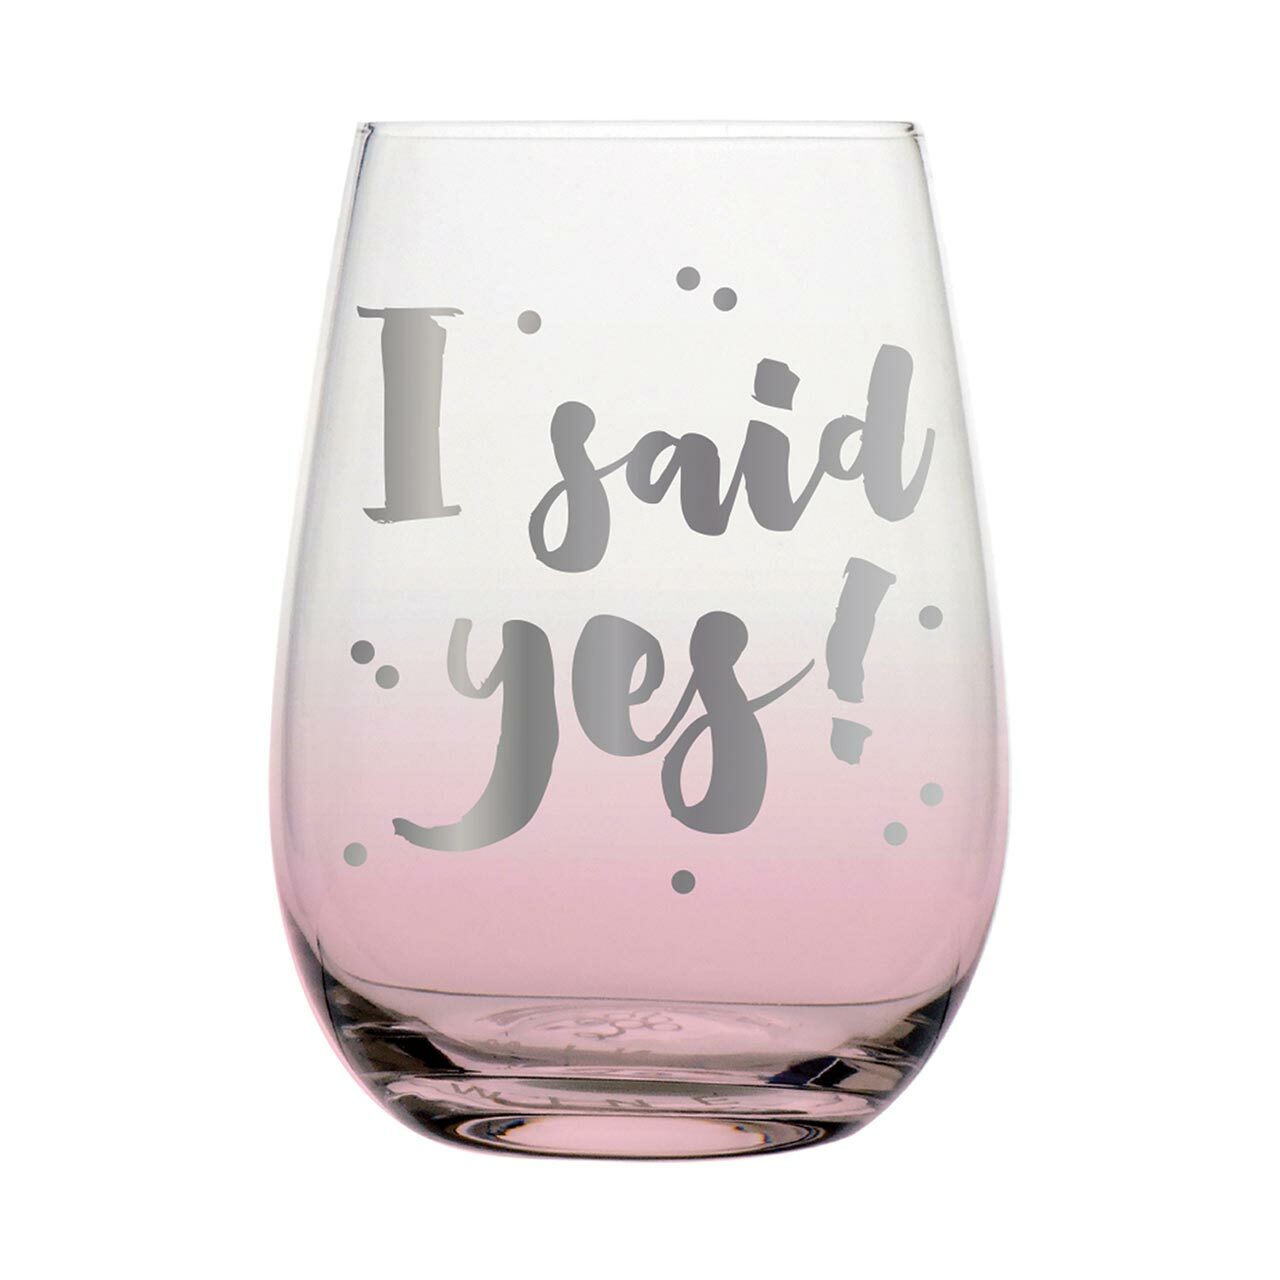 I Said Yes Wine Glass